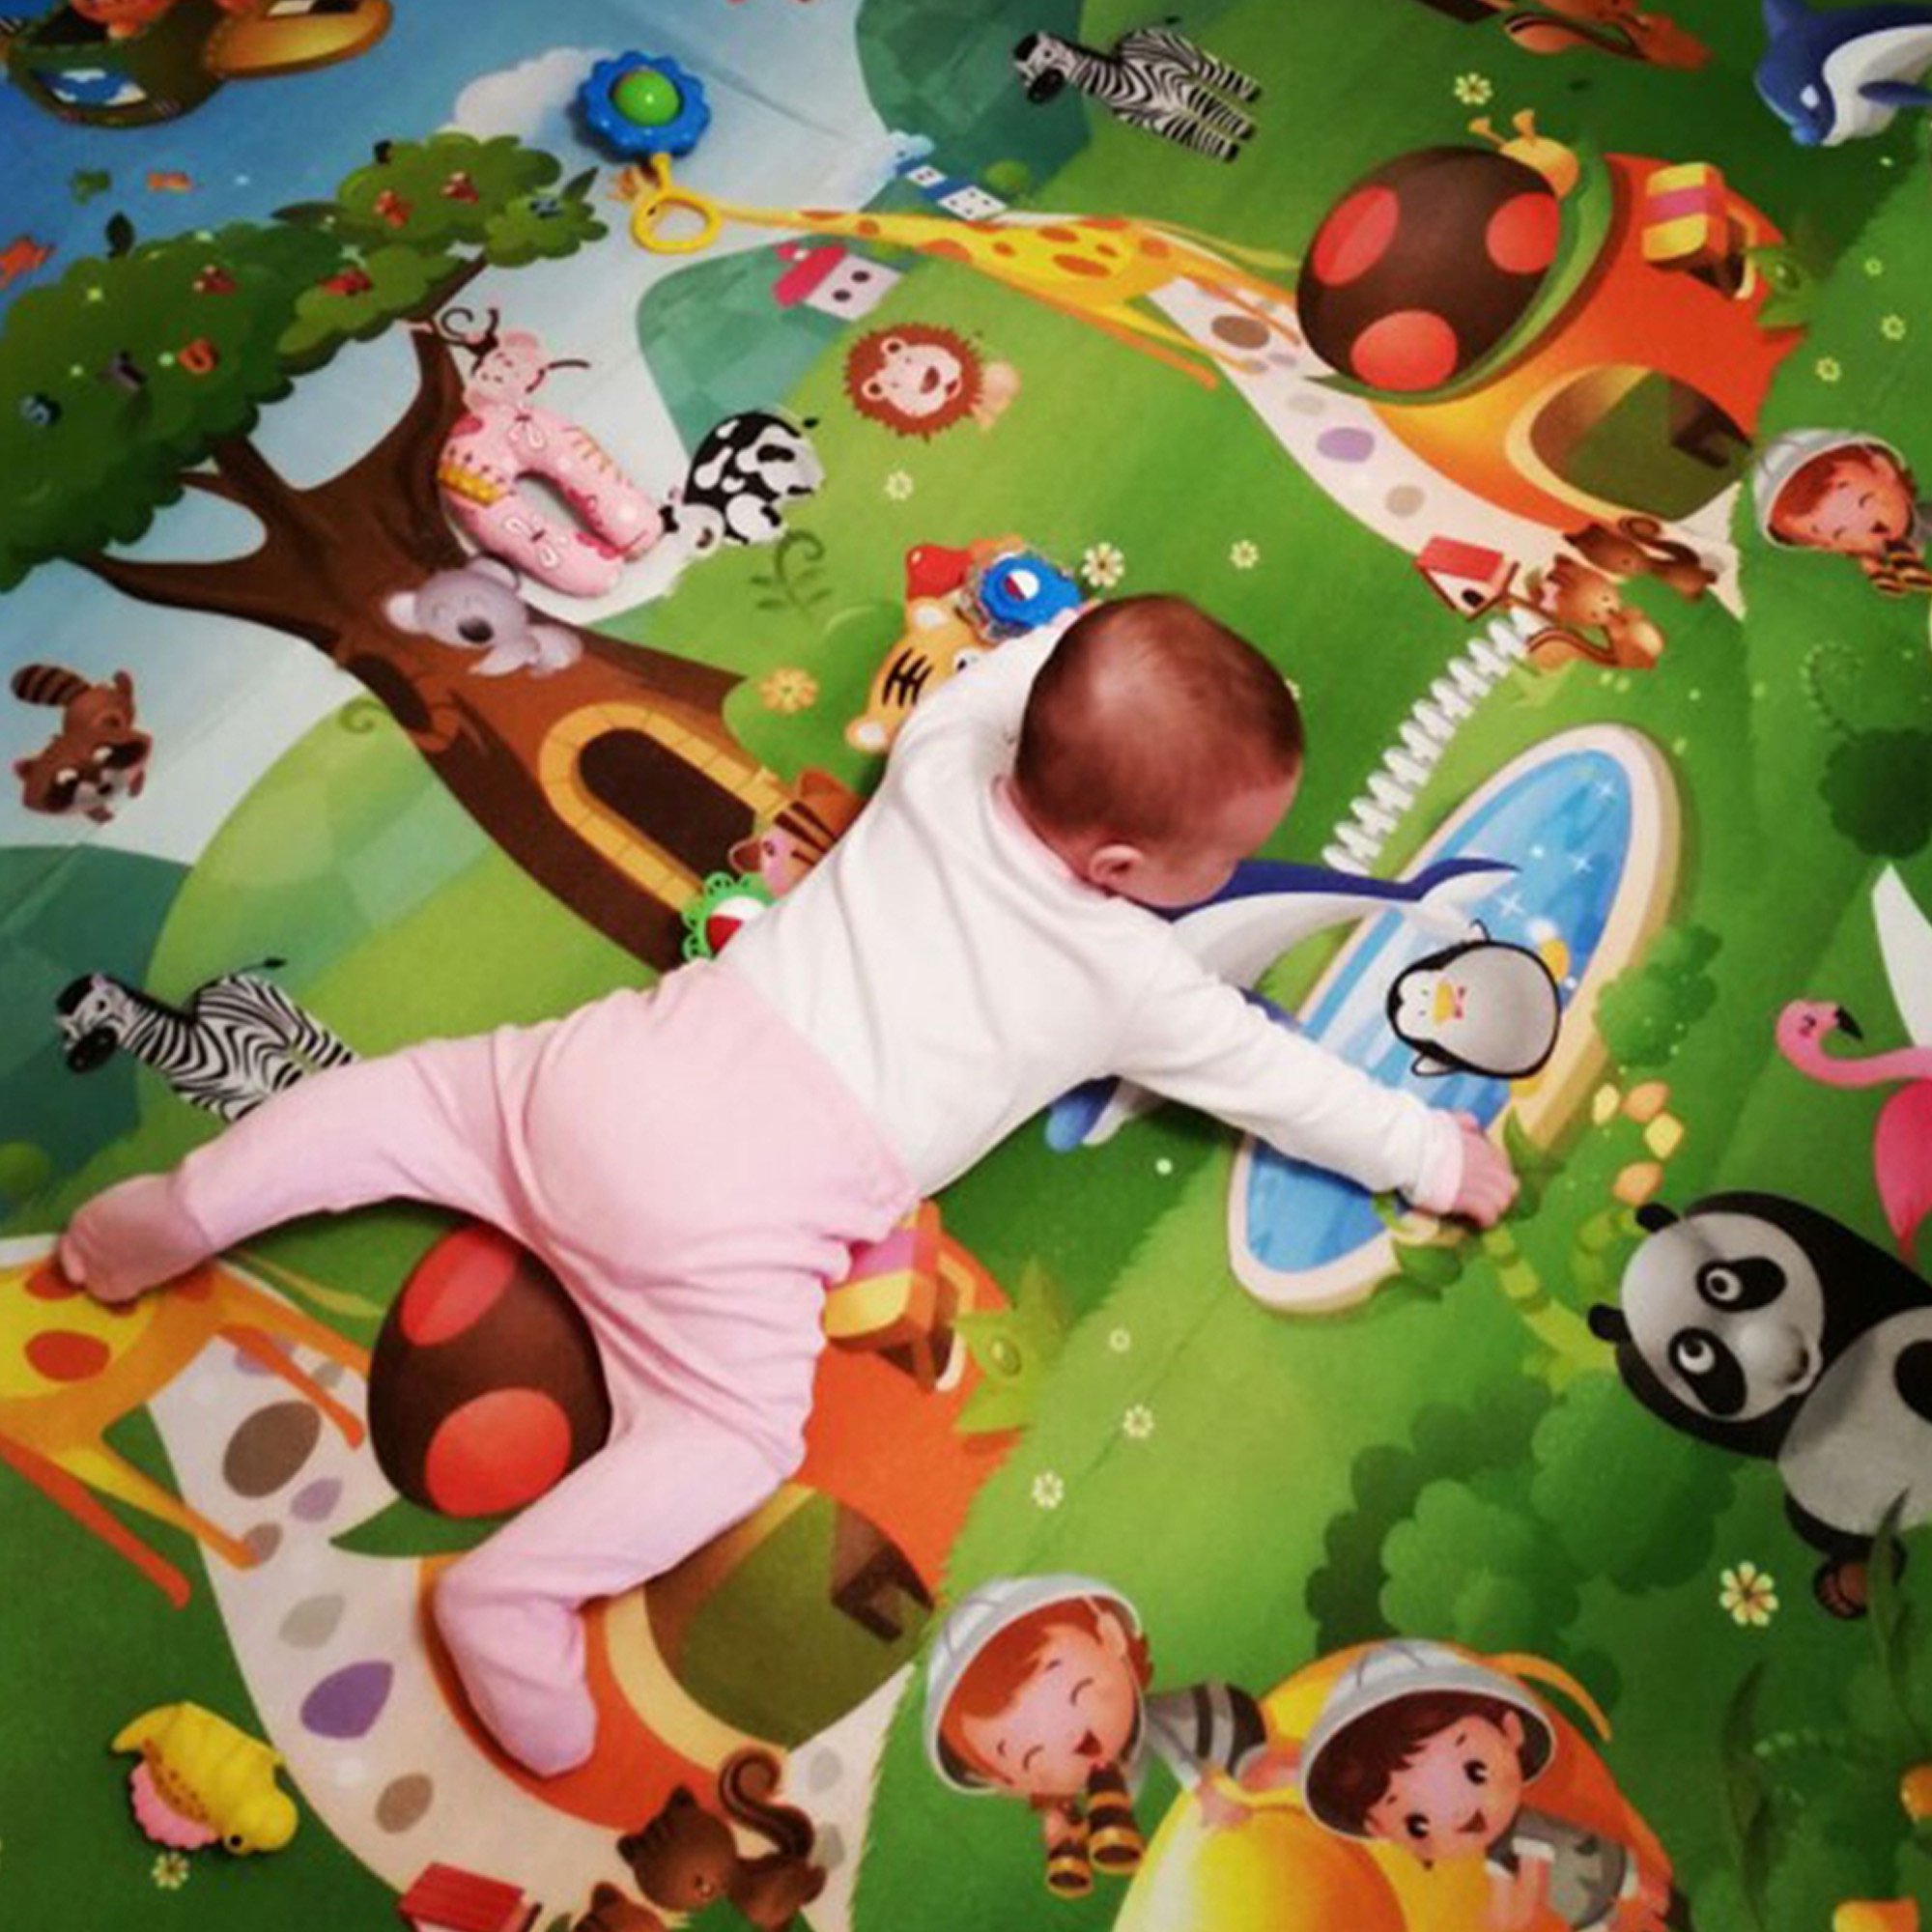 Musuos Baby Crawling Play Mat Kids Children Toddlers Floor Game PlayMat - image 4 of 6